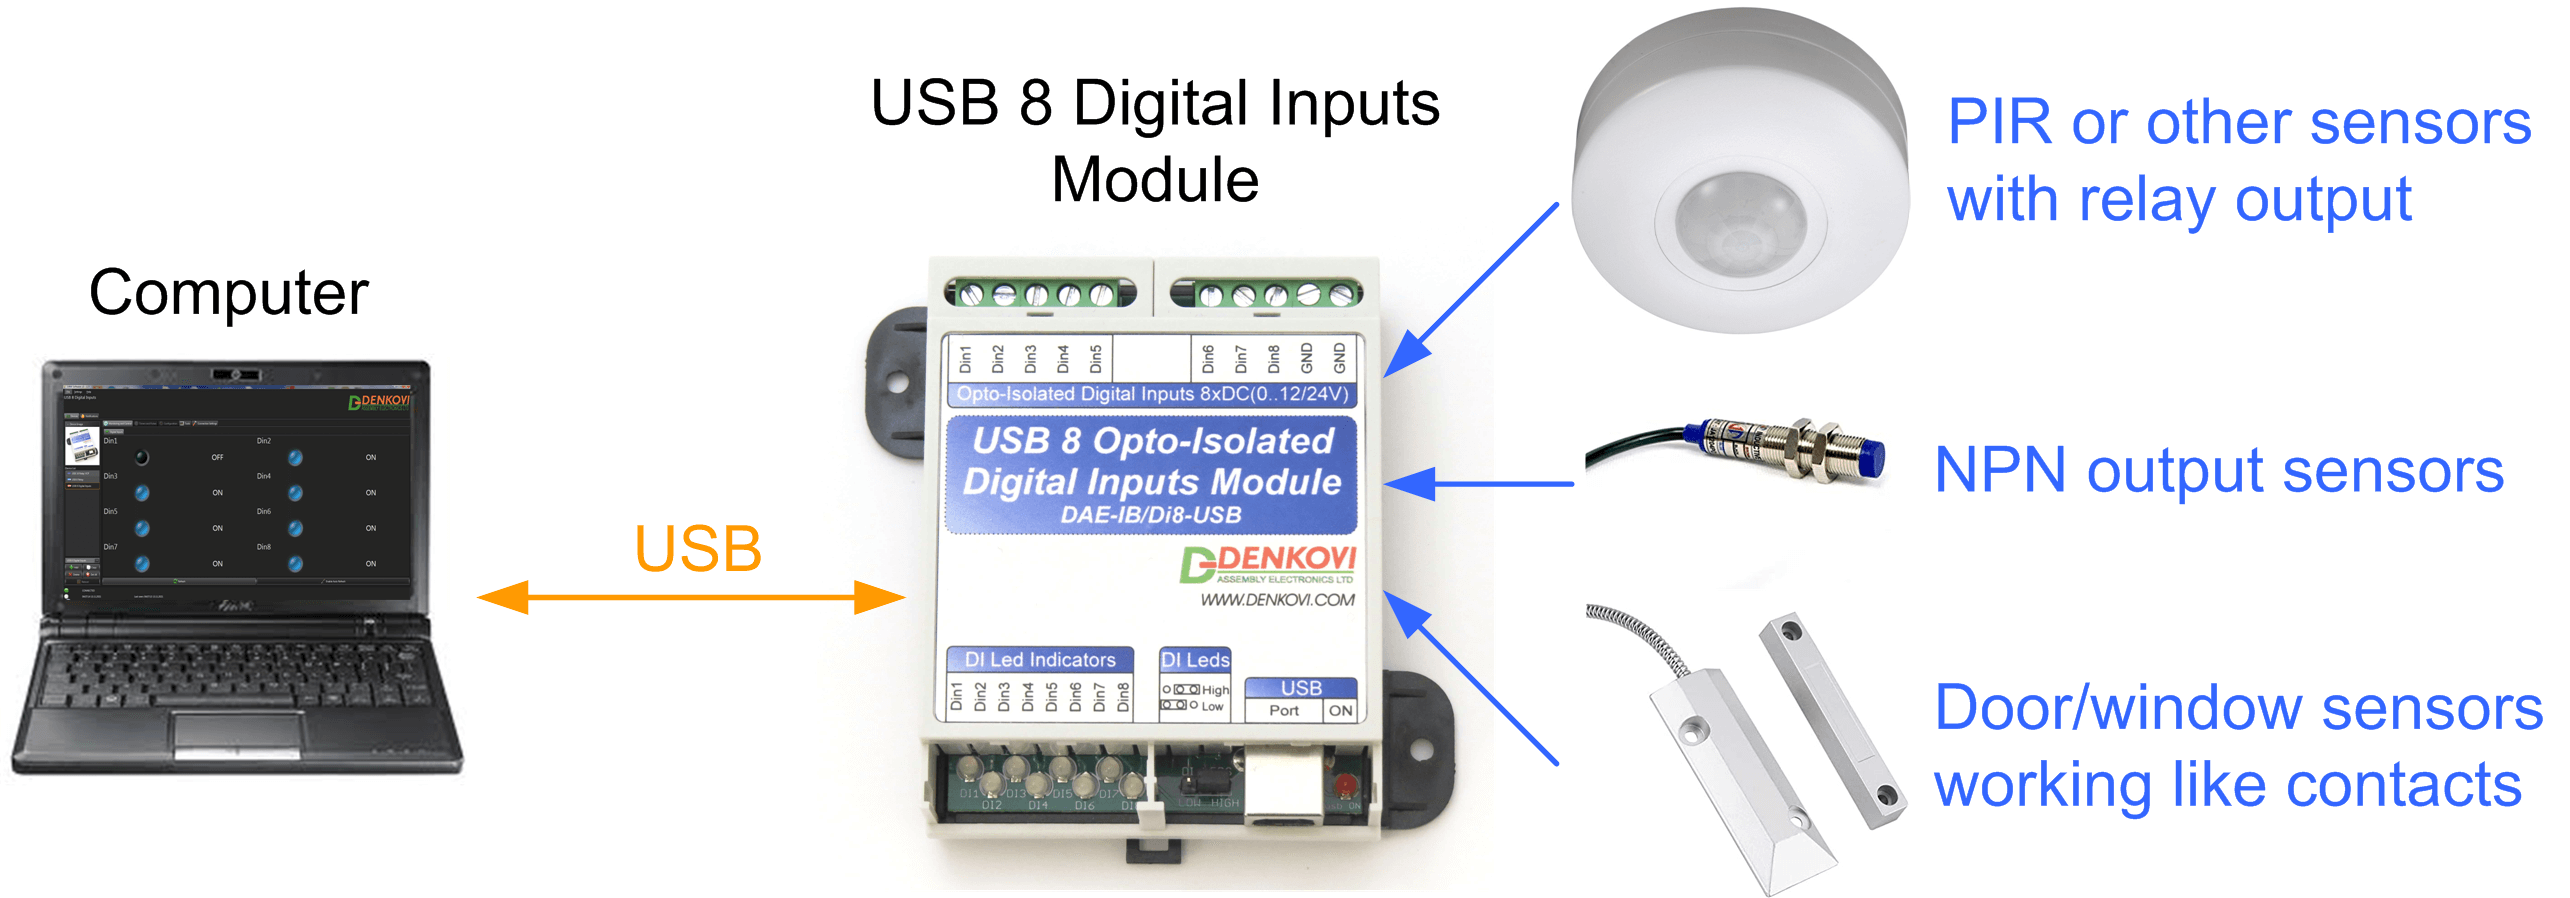 Connecting sensors to USB 8 digital inputs